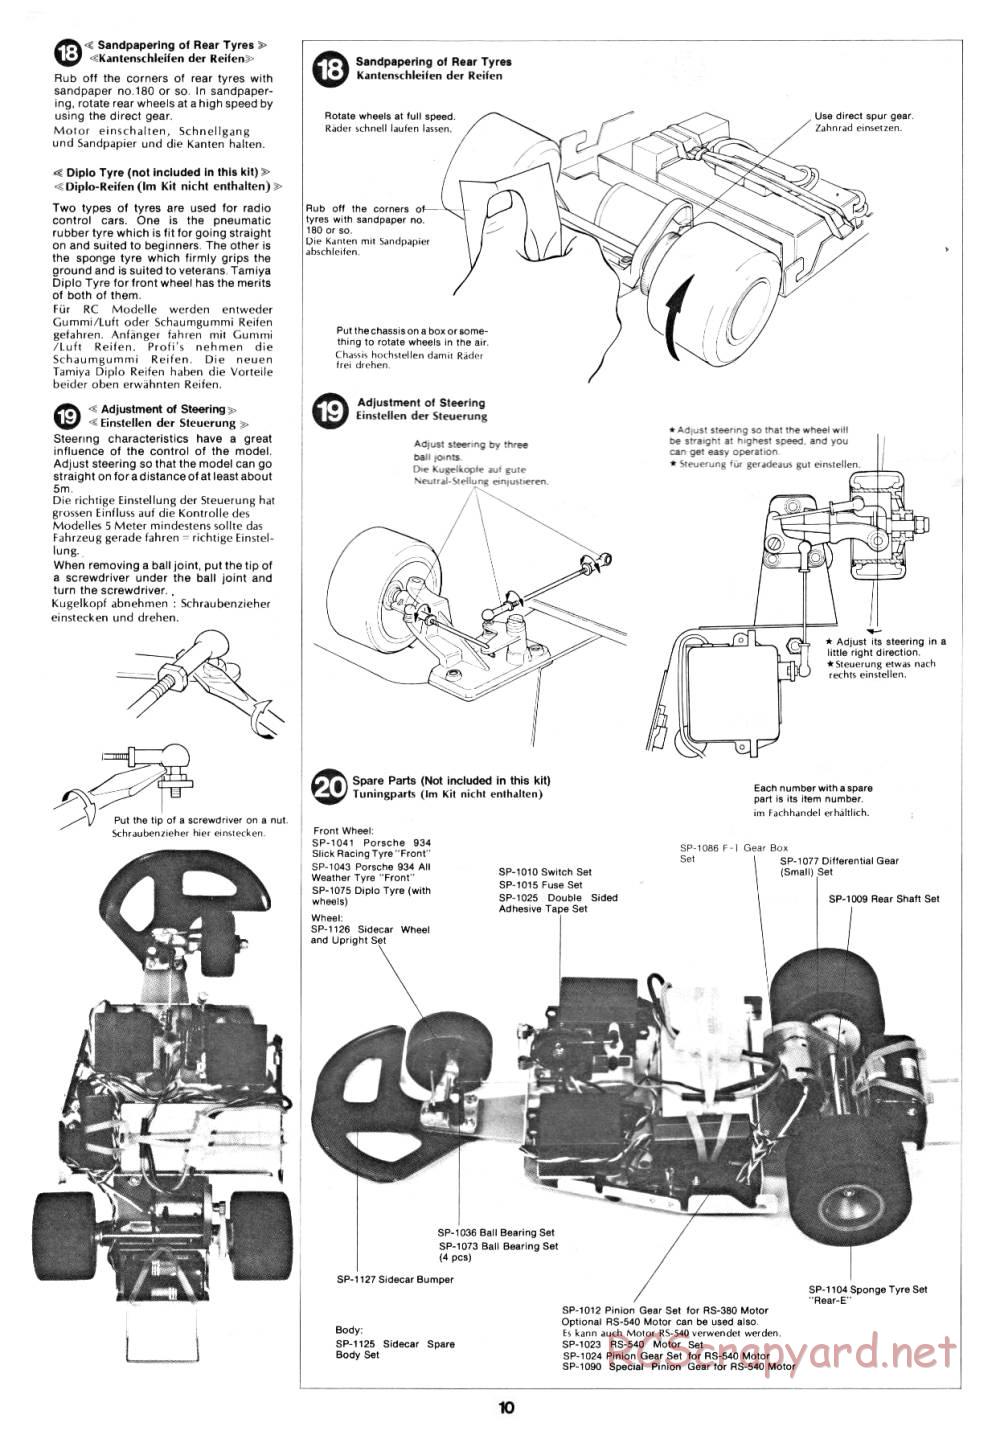 Tamiya - B2B Racing Sidecar - 58017 - Manual - Page 10